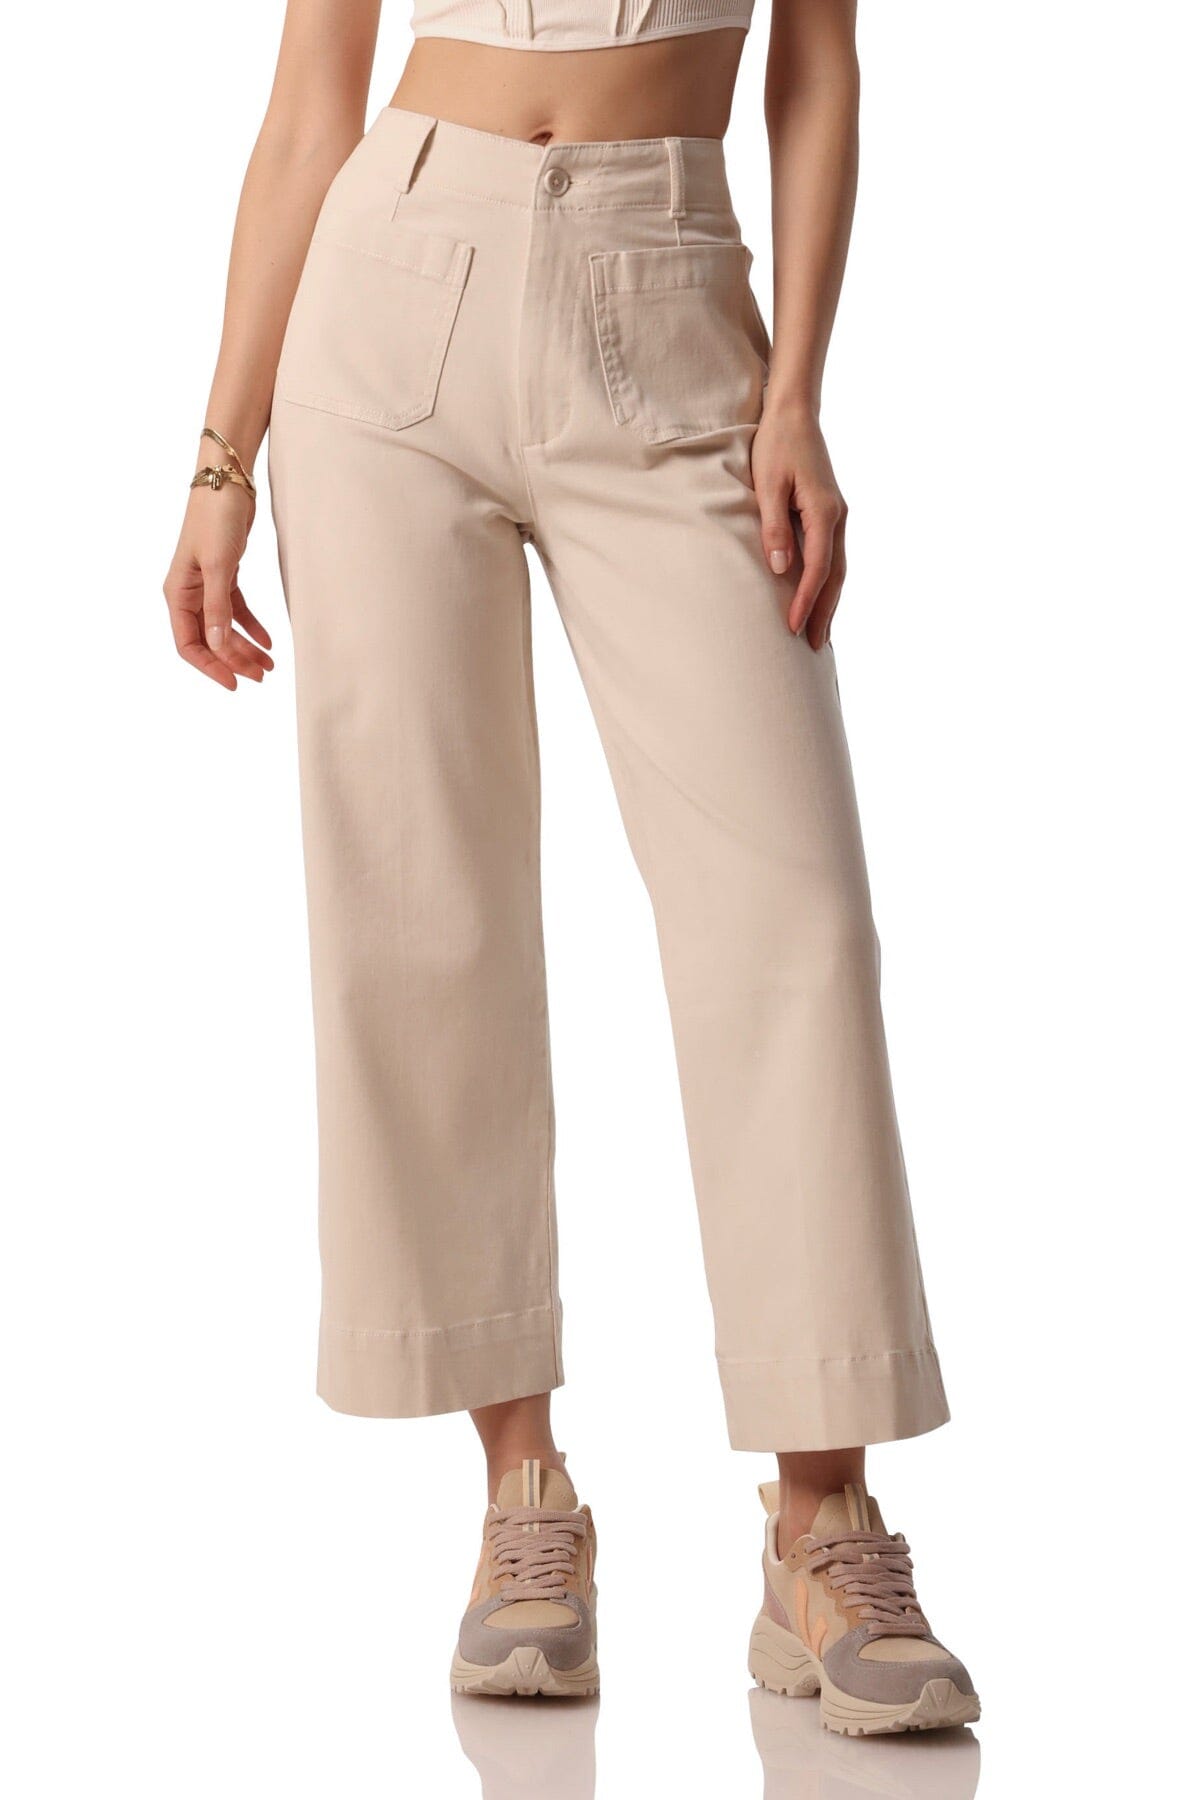 Patch Pocket Wide Leg Pants Rayon Blend Ecru Beige - Flattering High Rise Flare Pant for Women Designer Fashion Bottoms